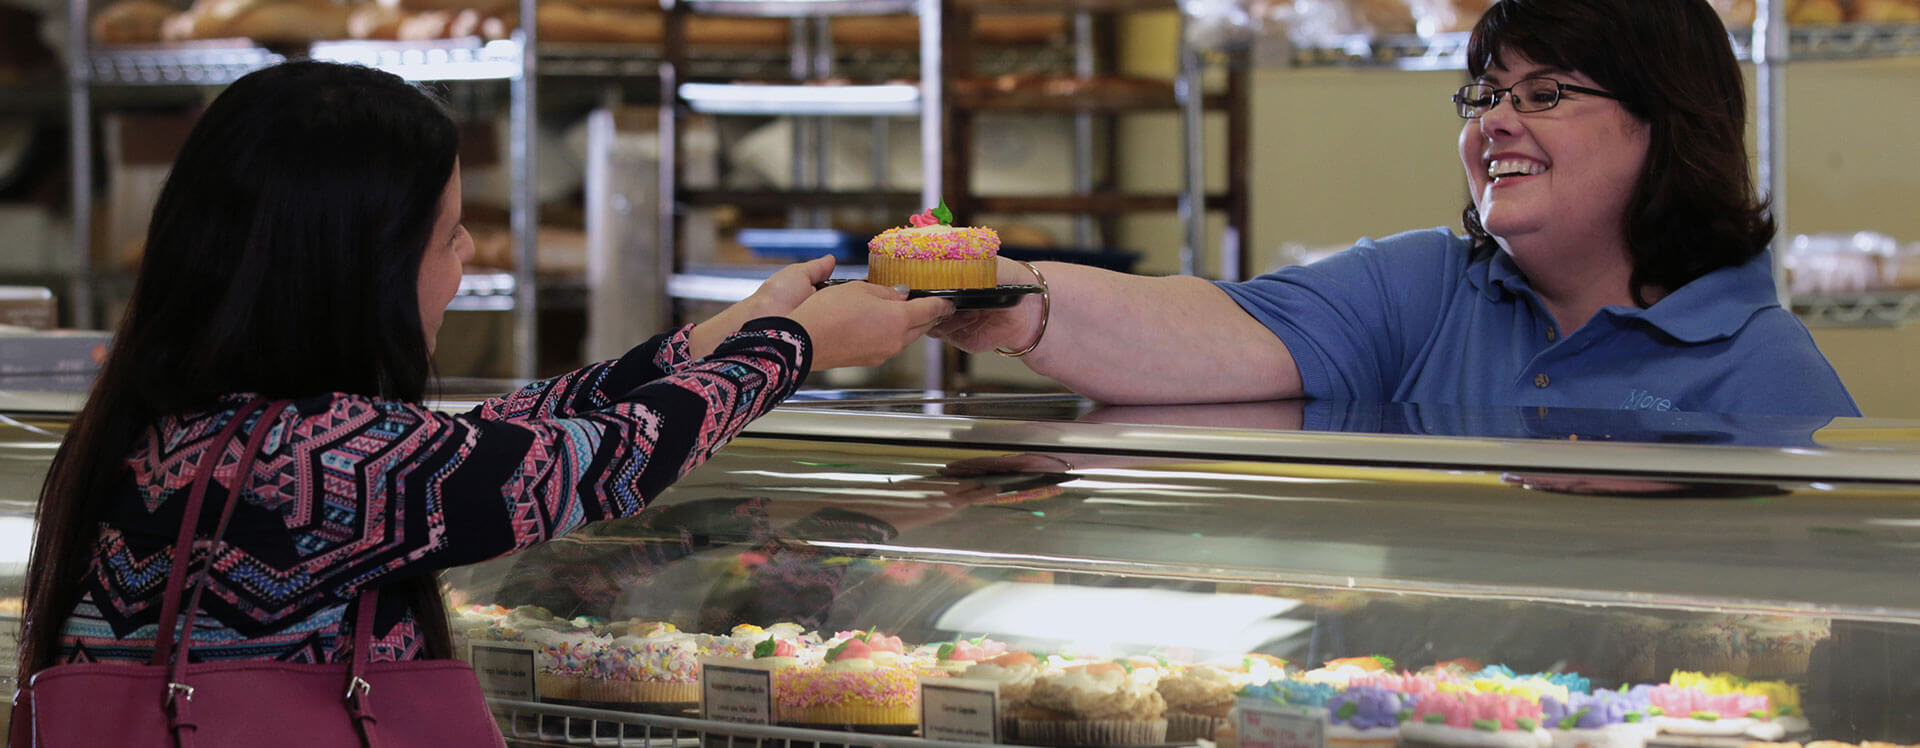 Susan handing cupcake to customer